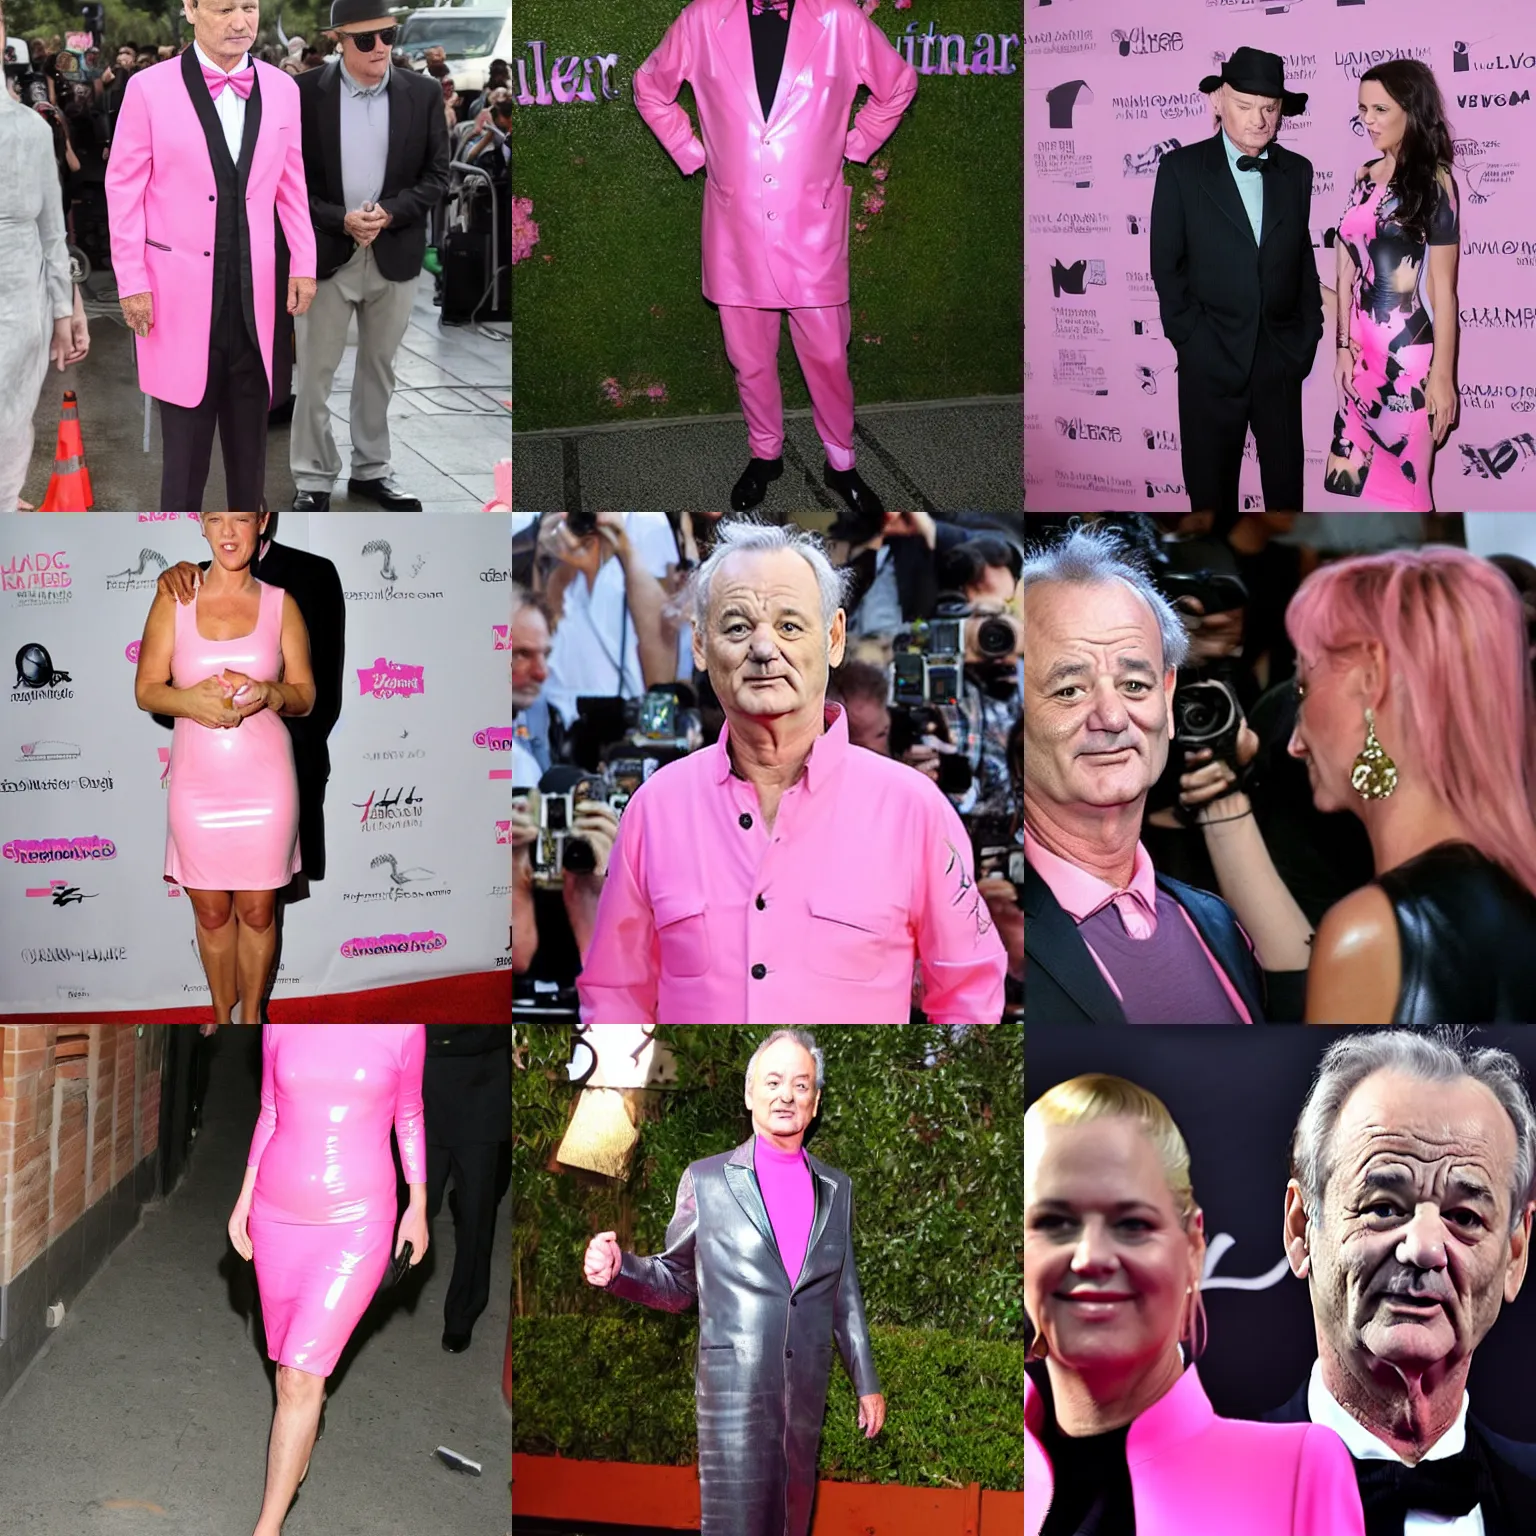 Prompt: bill murray wearing a full body pink latex dress